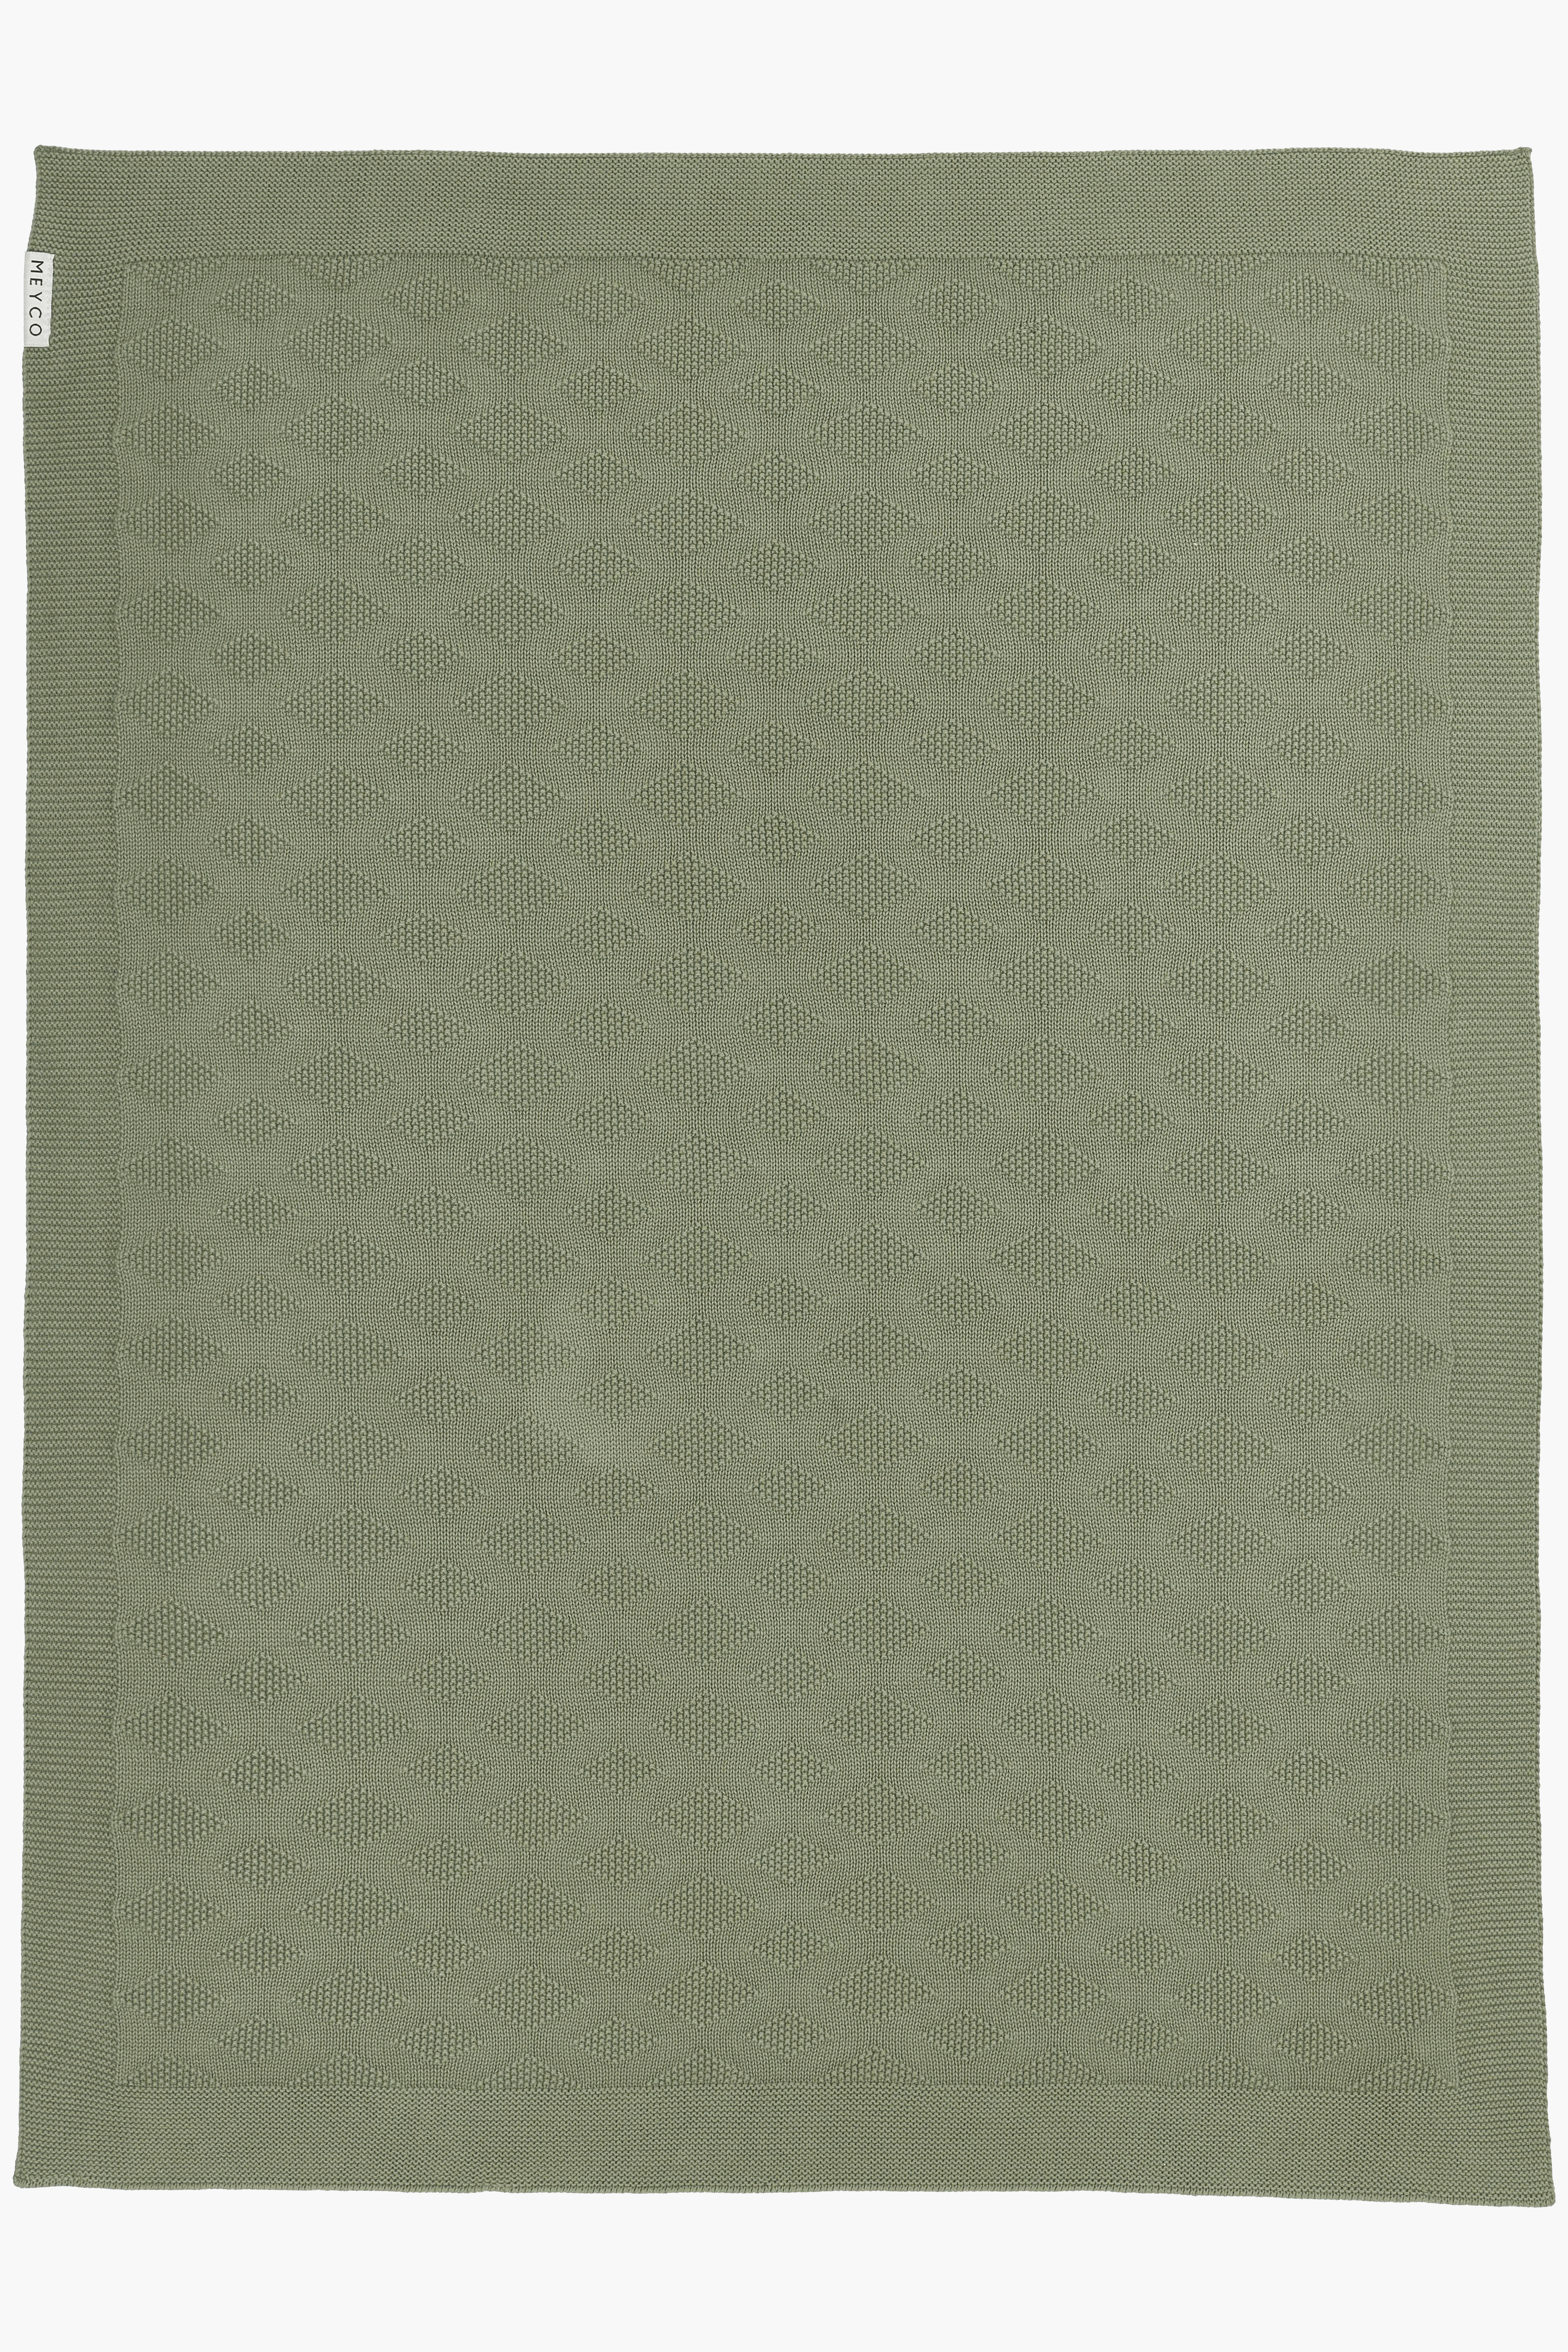 Babydecke organisch Diamond - forest green - 75x100cm